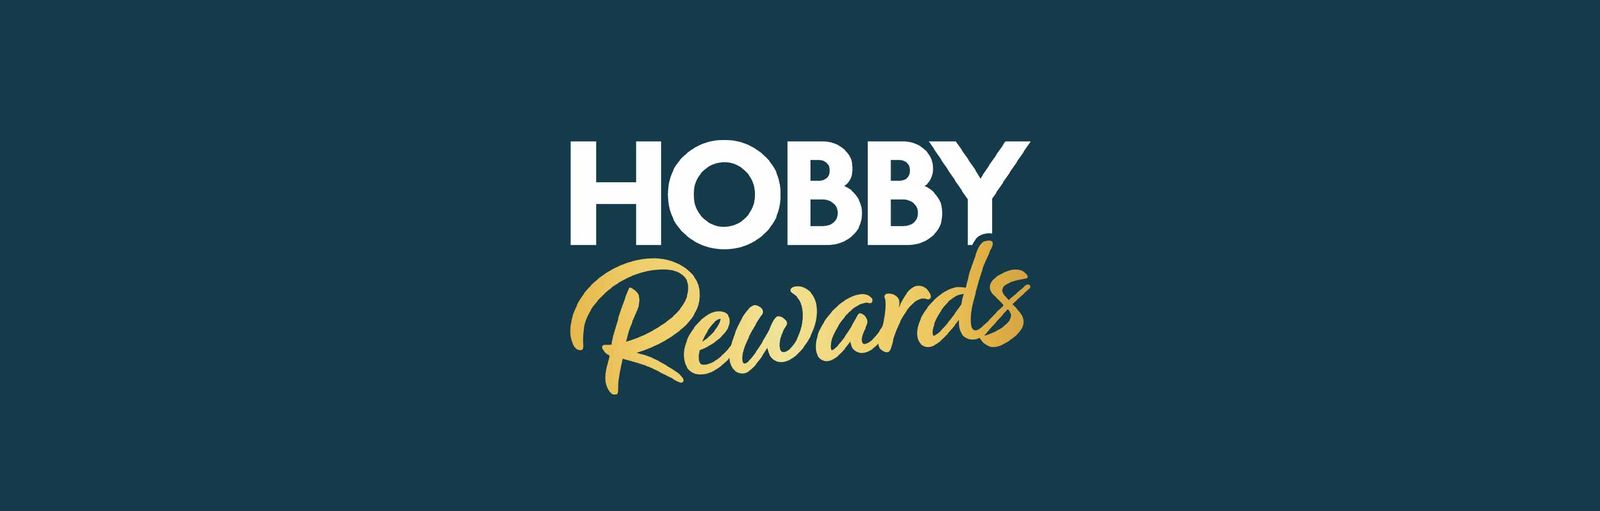 Hobby Rewards :: Hornby Hobbies